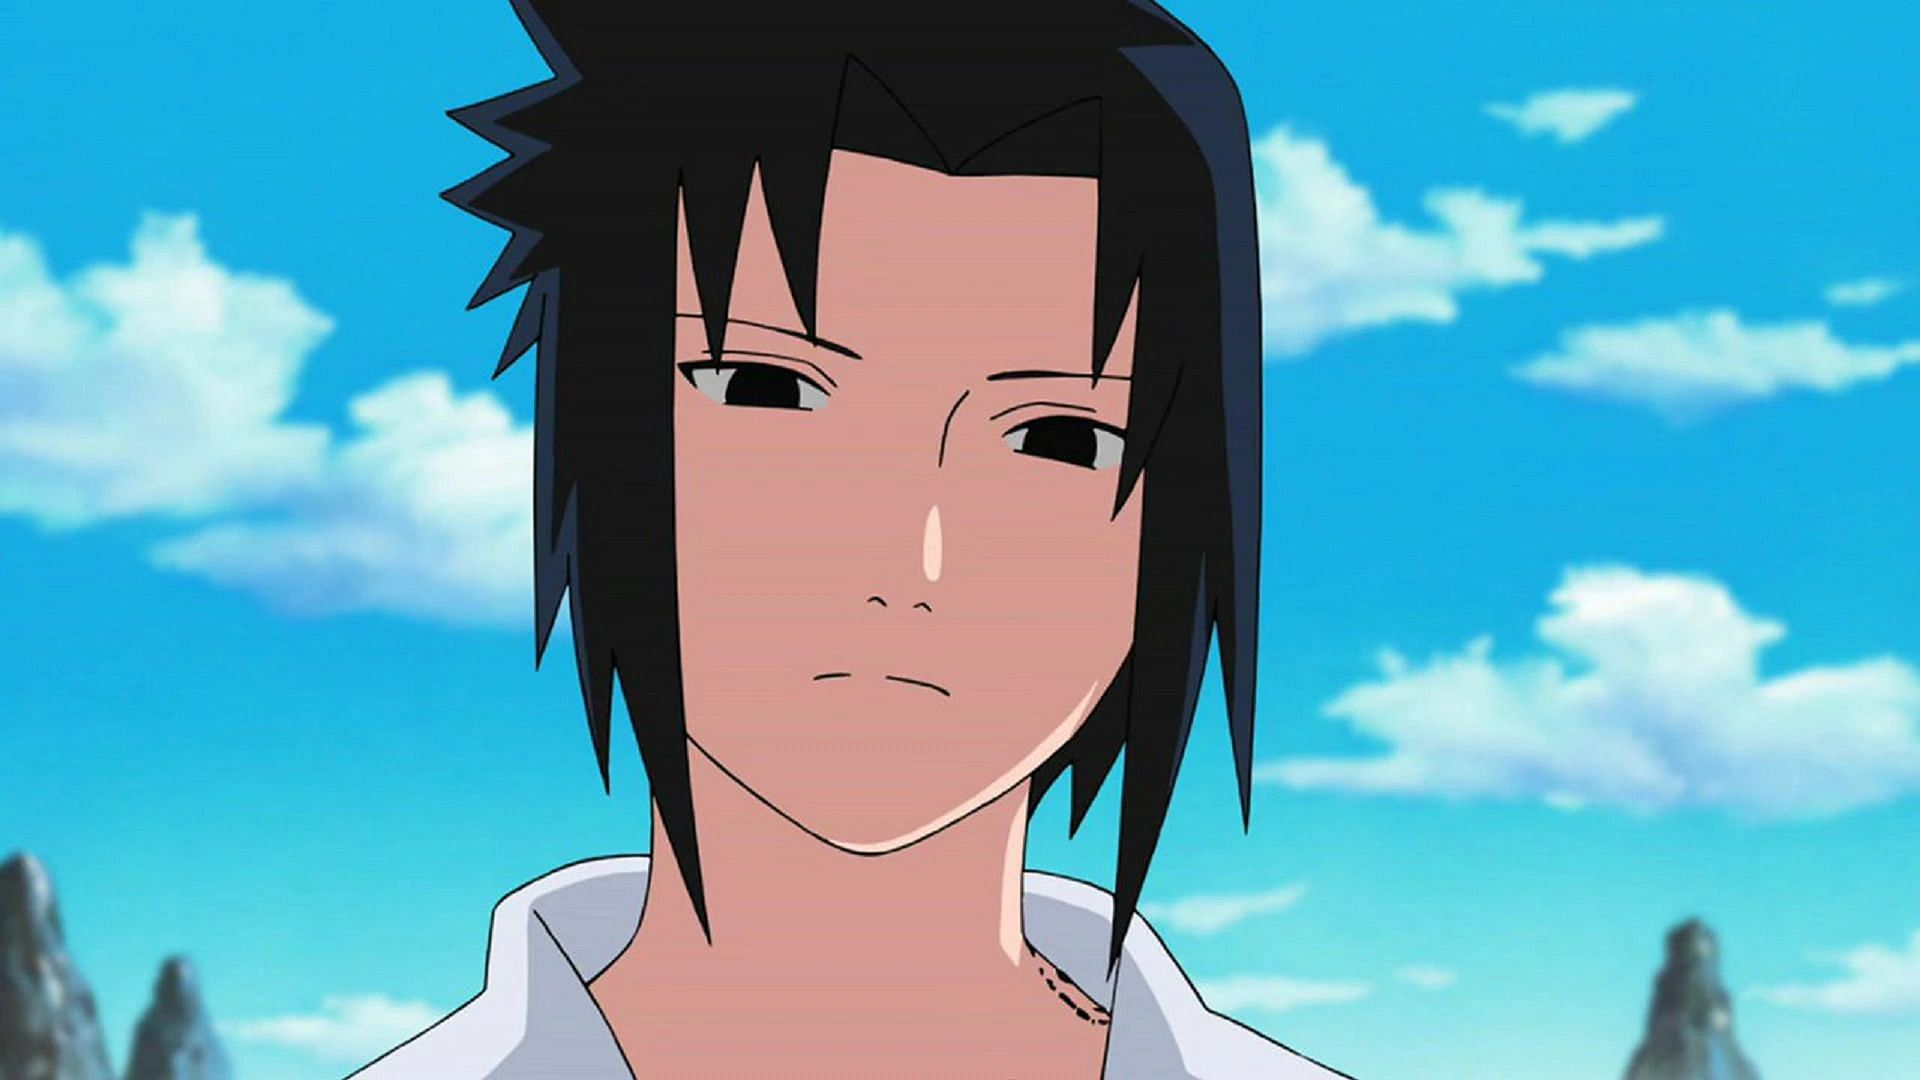 Sasuke, as seen in Naruto